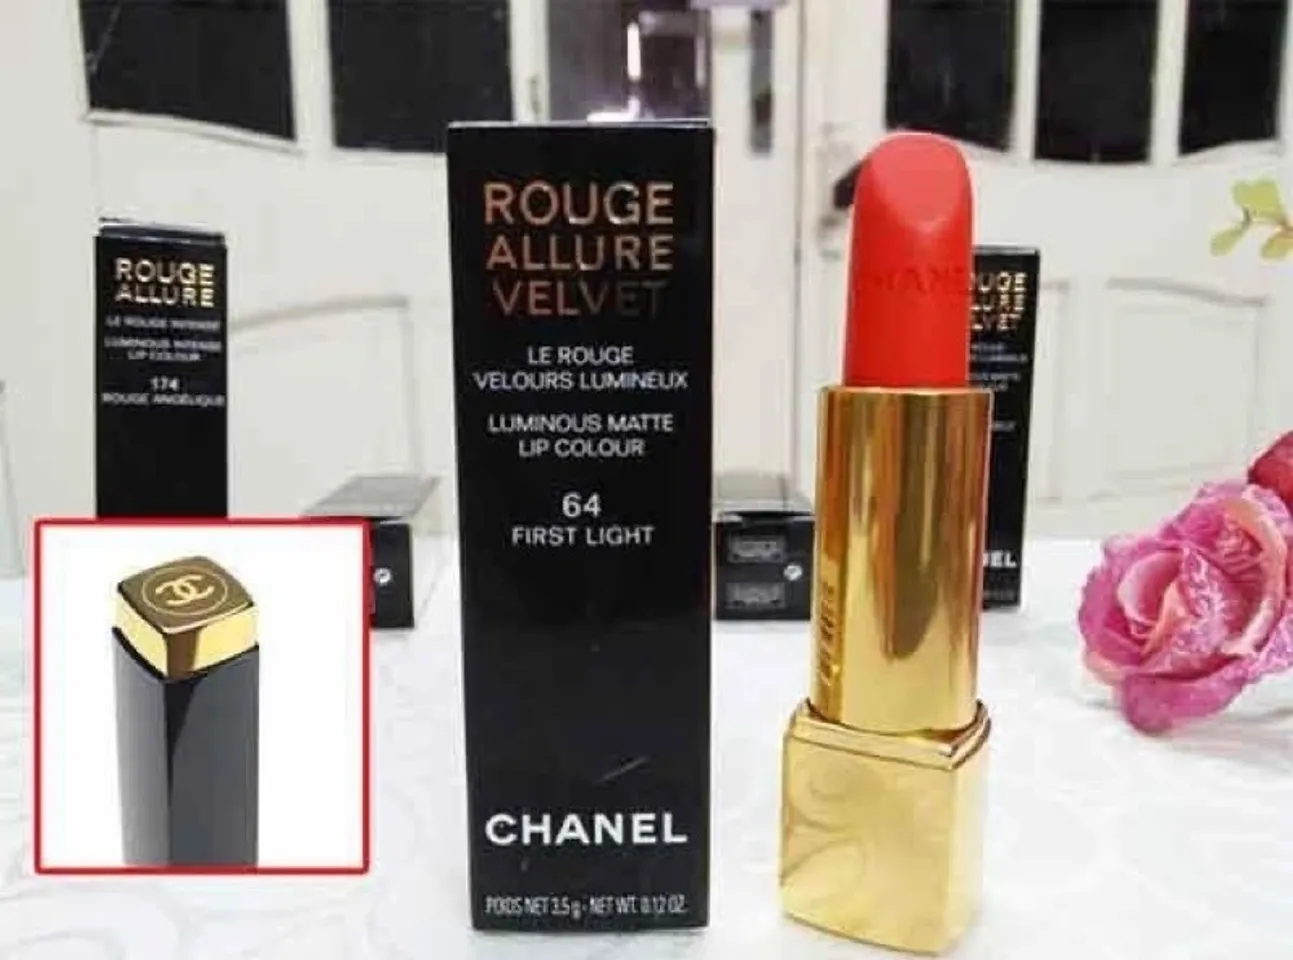 Son Chanel Rouge Allure Velvet Luminous Matte  64 First Light  Mỹ phẩm  hàng hiệu cao cấp USA UK  Ali Son Mac